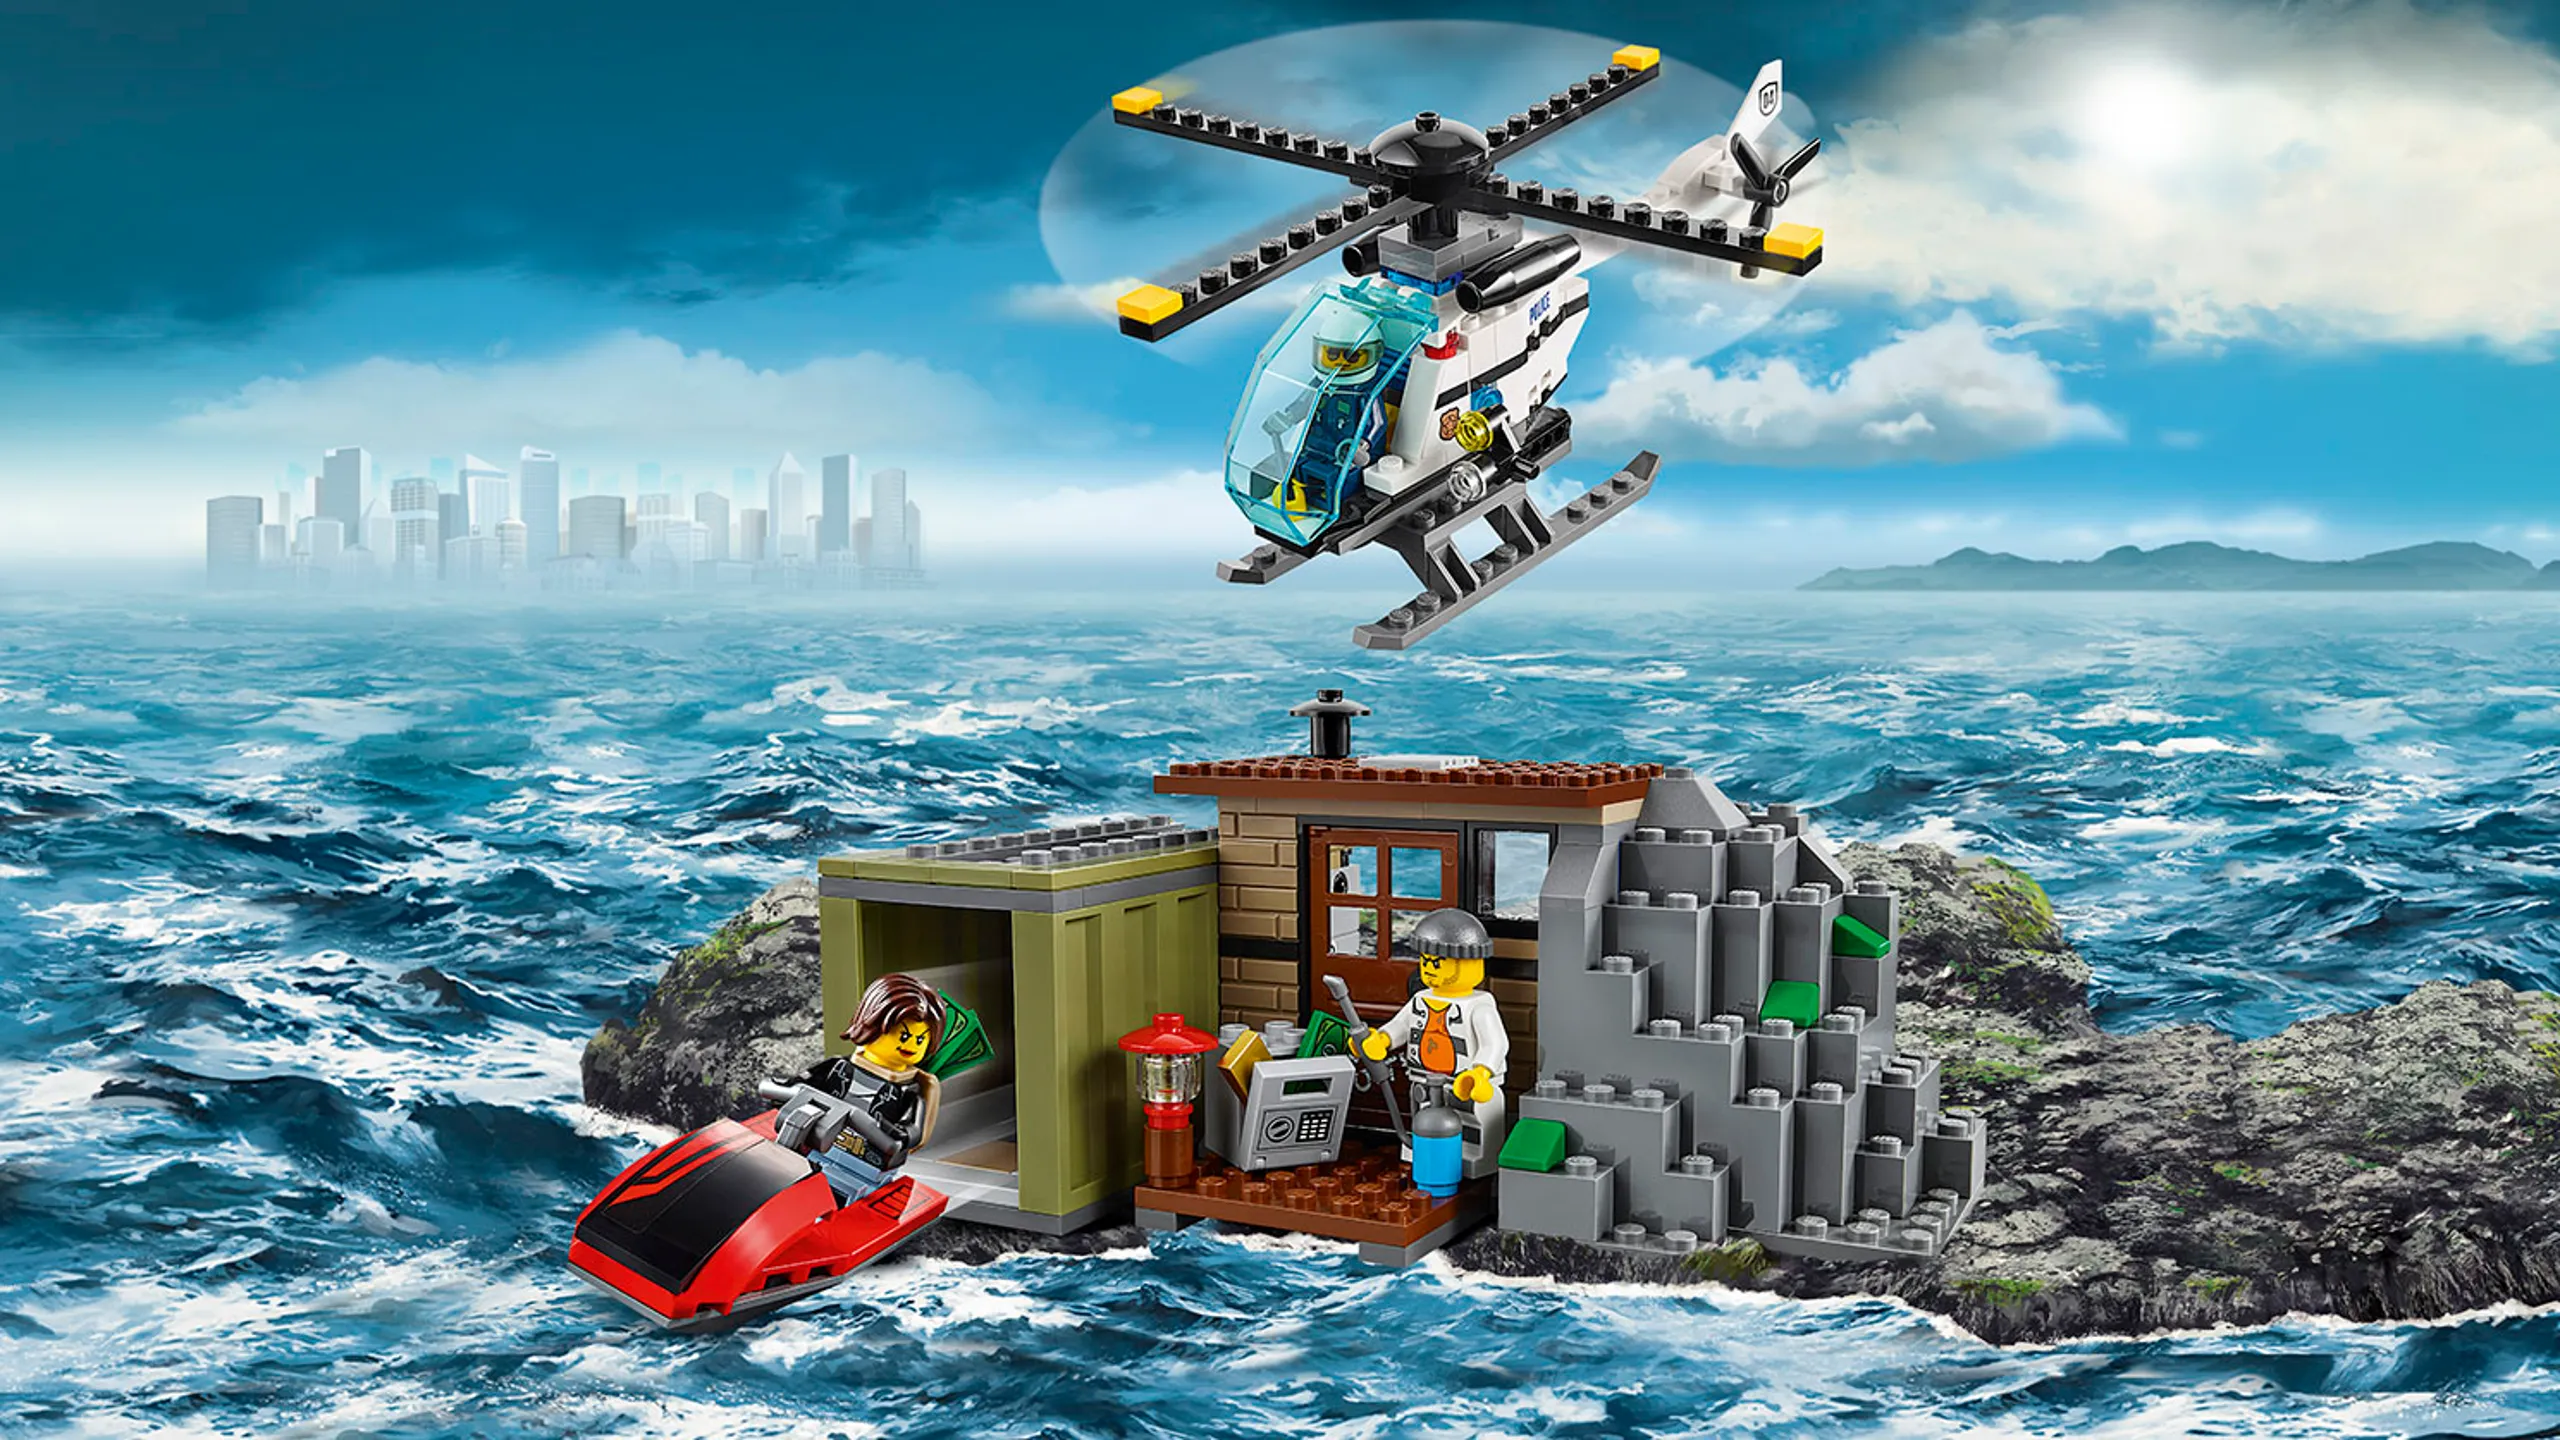 LEGO City crook minifigures hideout – Crooks Island 60131